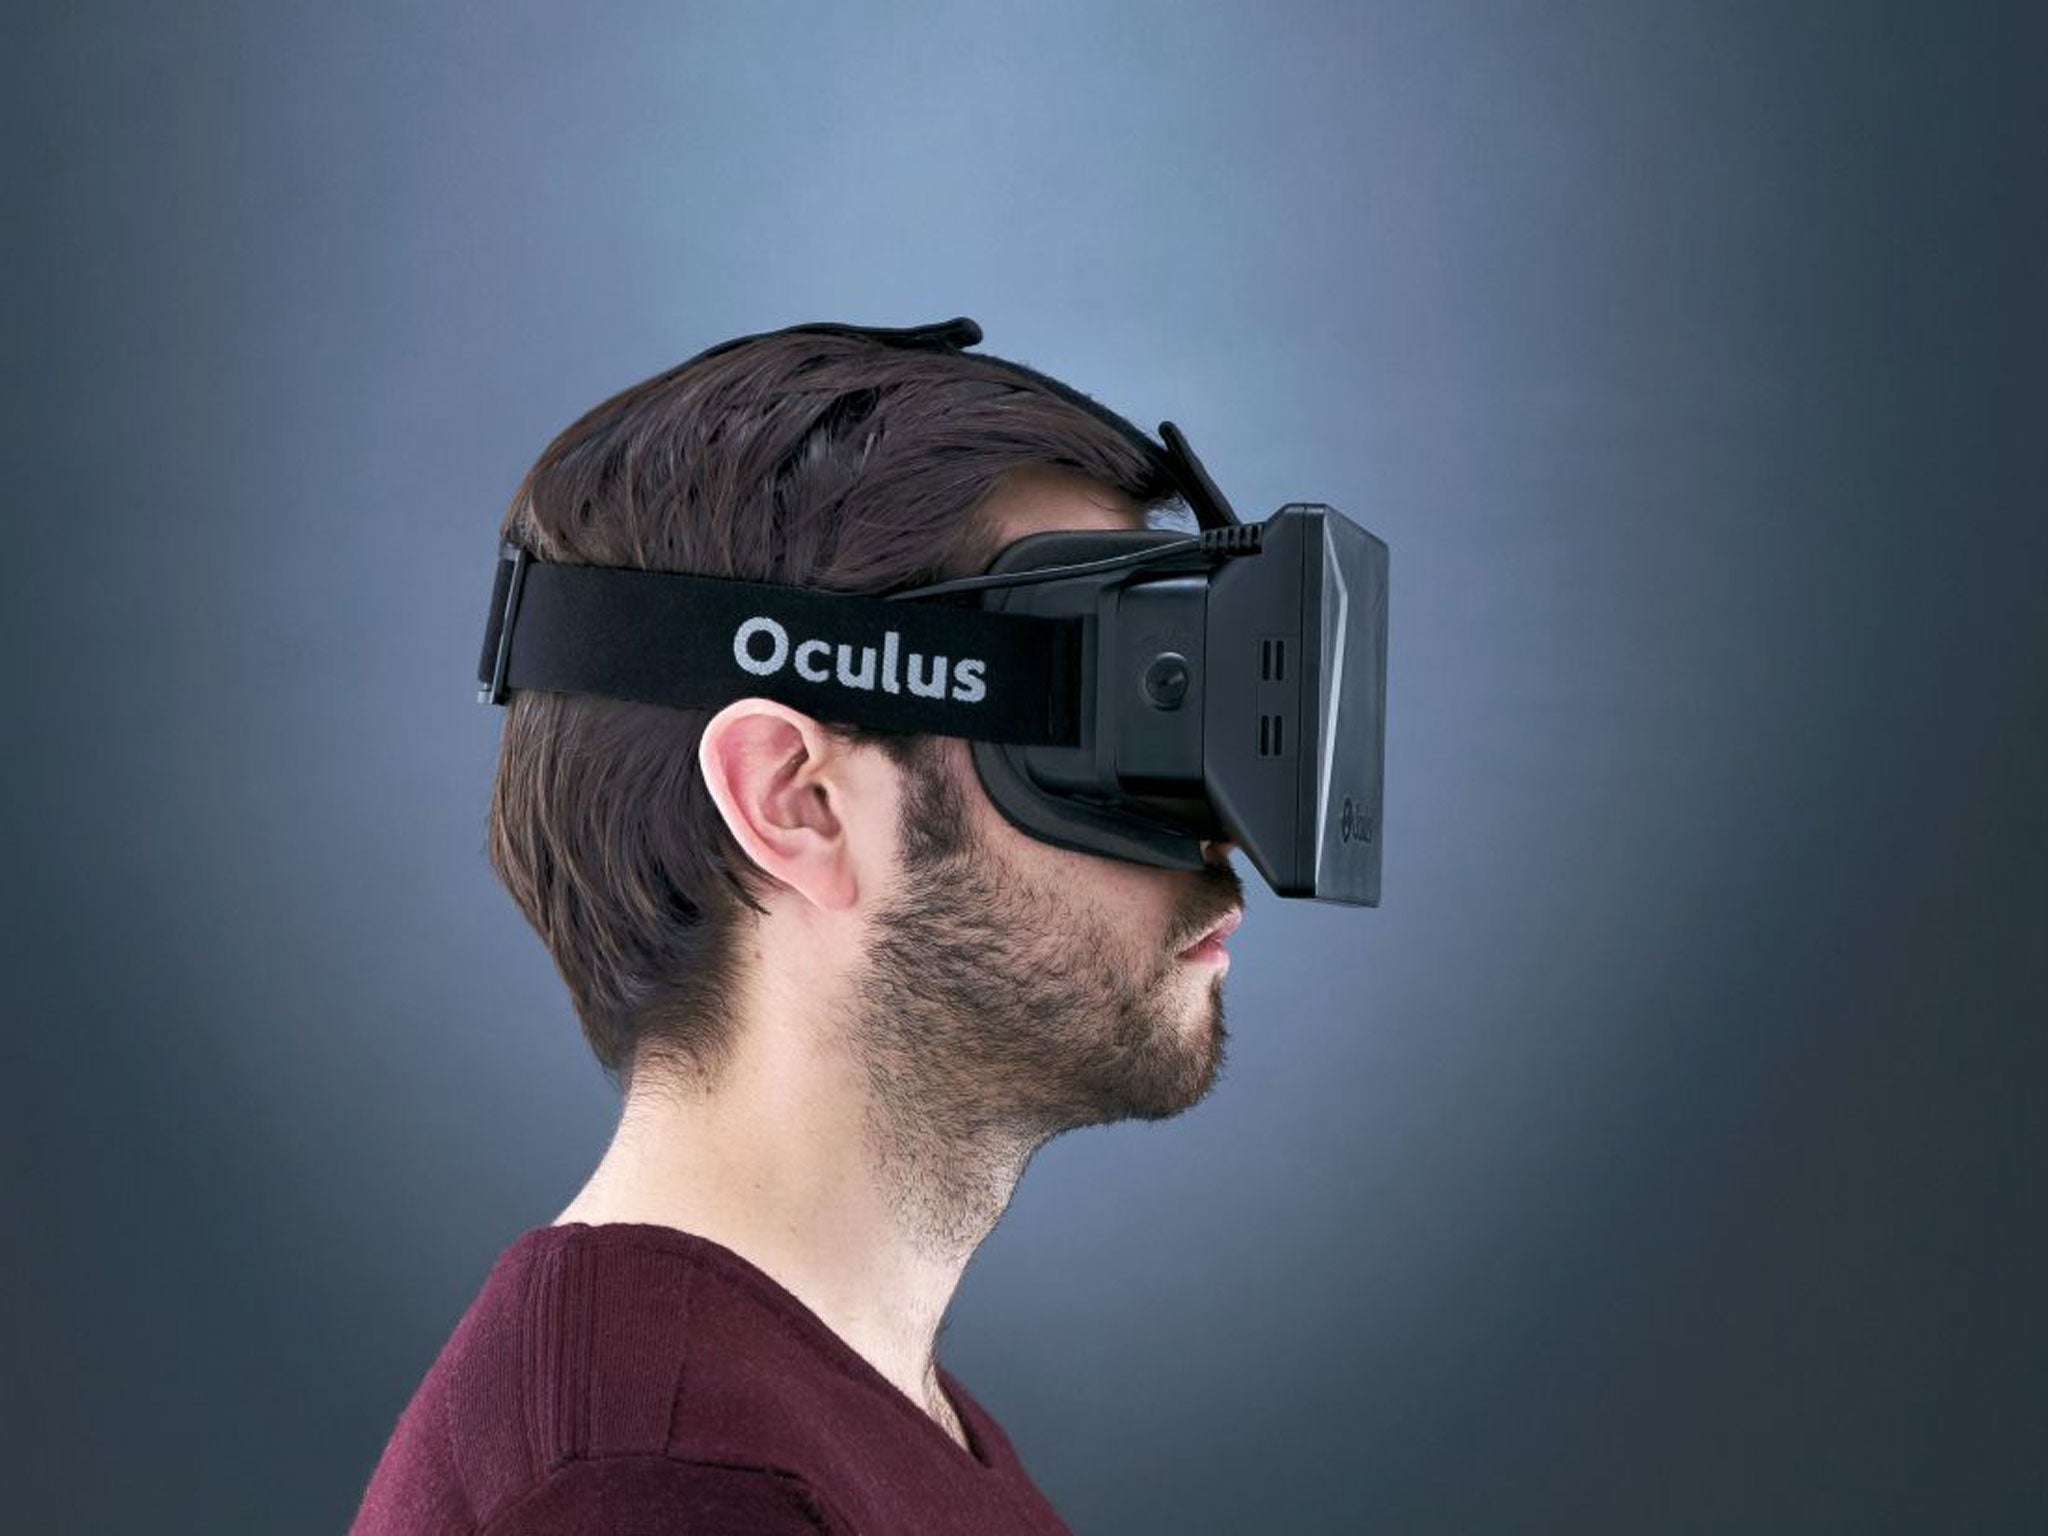 Vr type. Шлем Oculus Rift. ВР очки Окулус. VR шлем Oculus. Очки виртуальной реальности Oculus Rift.